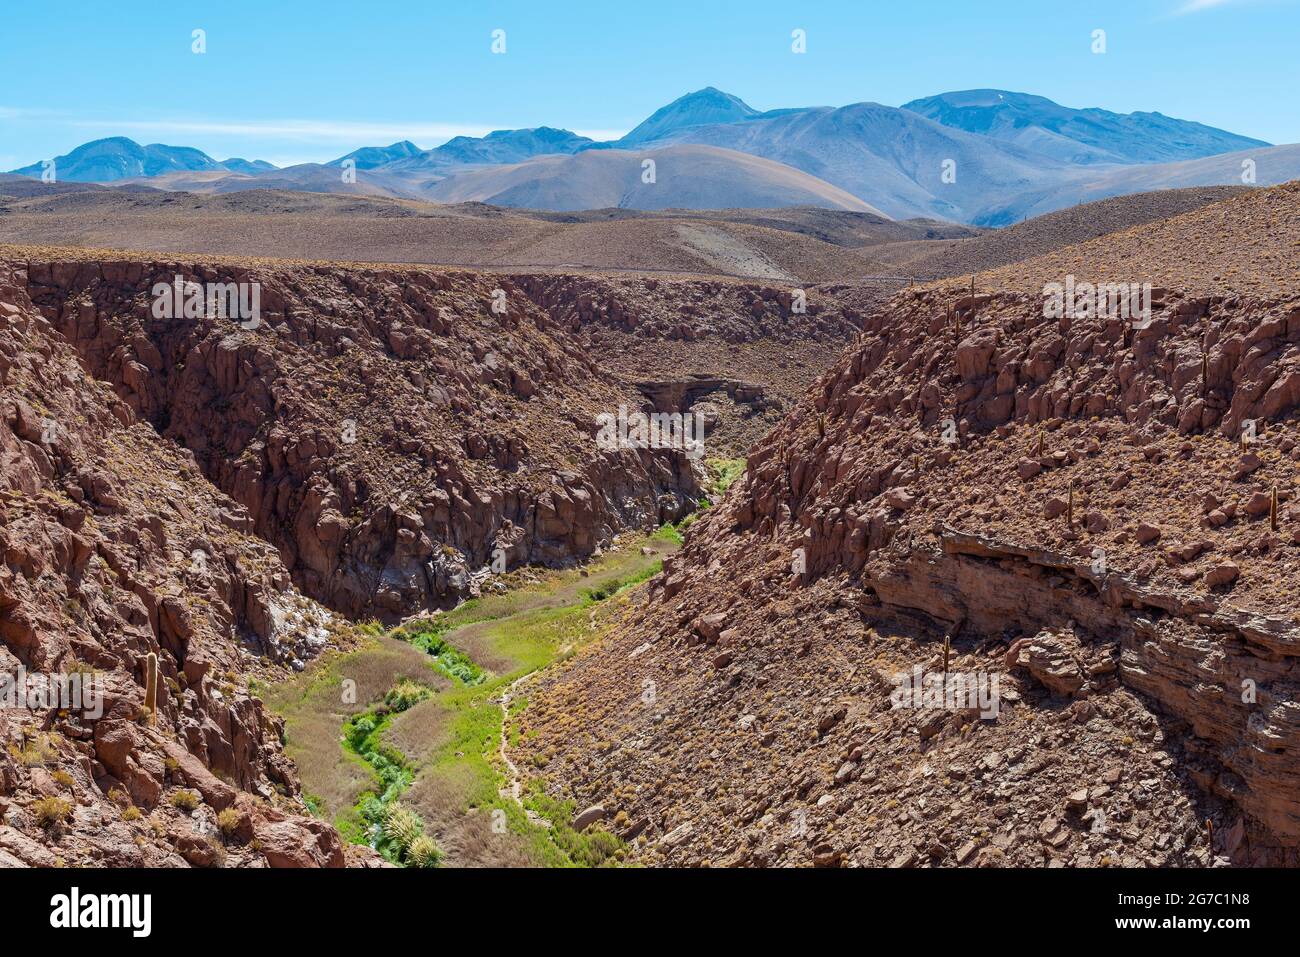 Rare stream with green fertile valley in the arid Atacama desert, Chile. Stock Photo